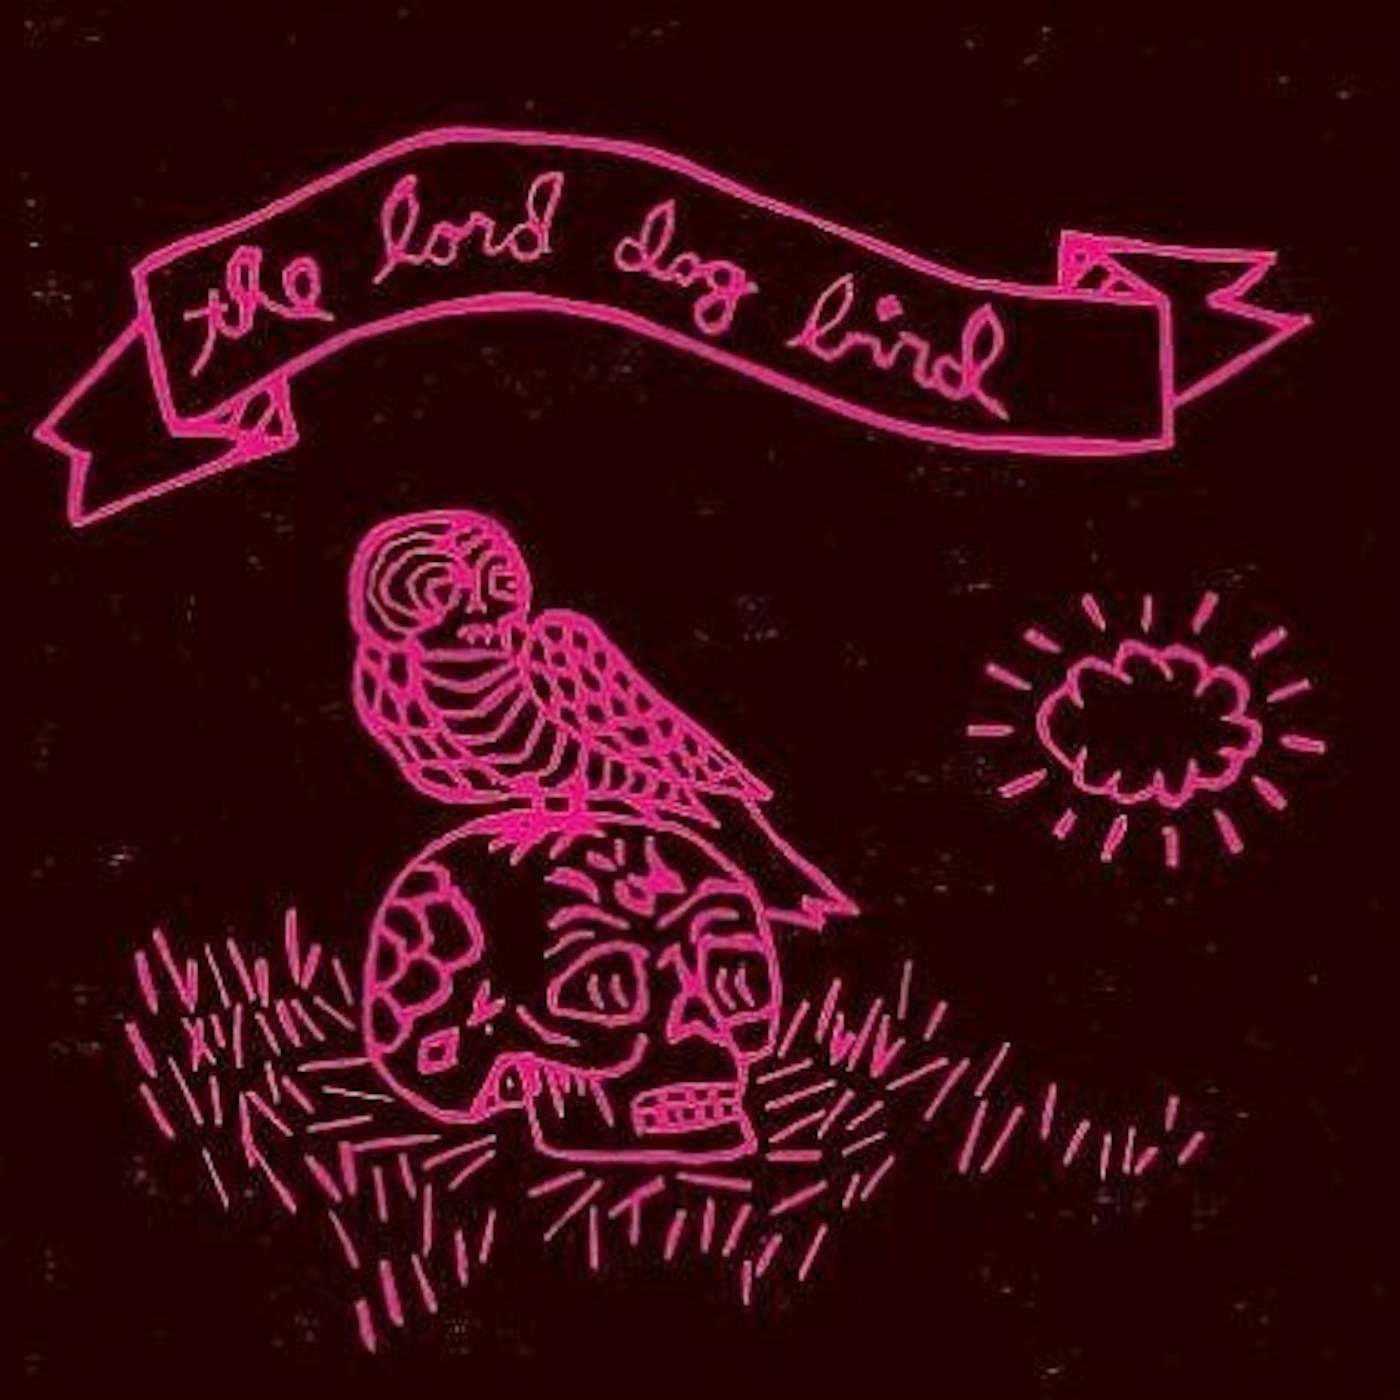 The Lord Dog Bird Vinyl Record